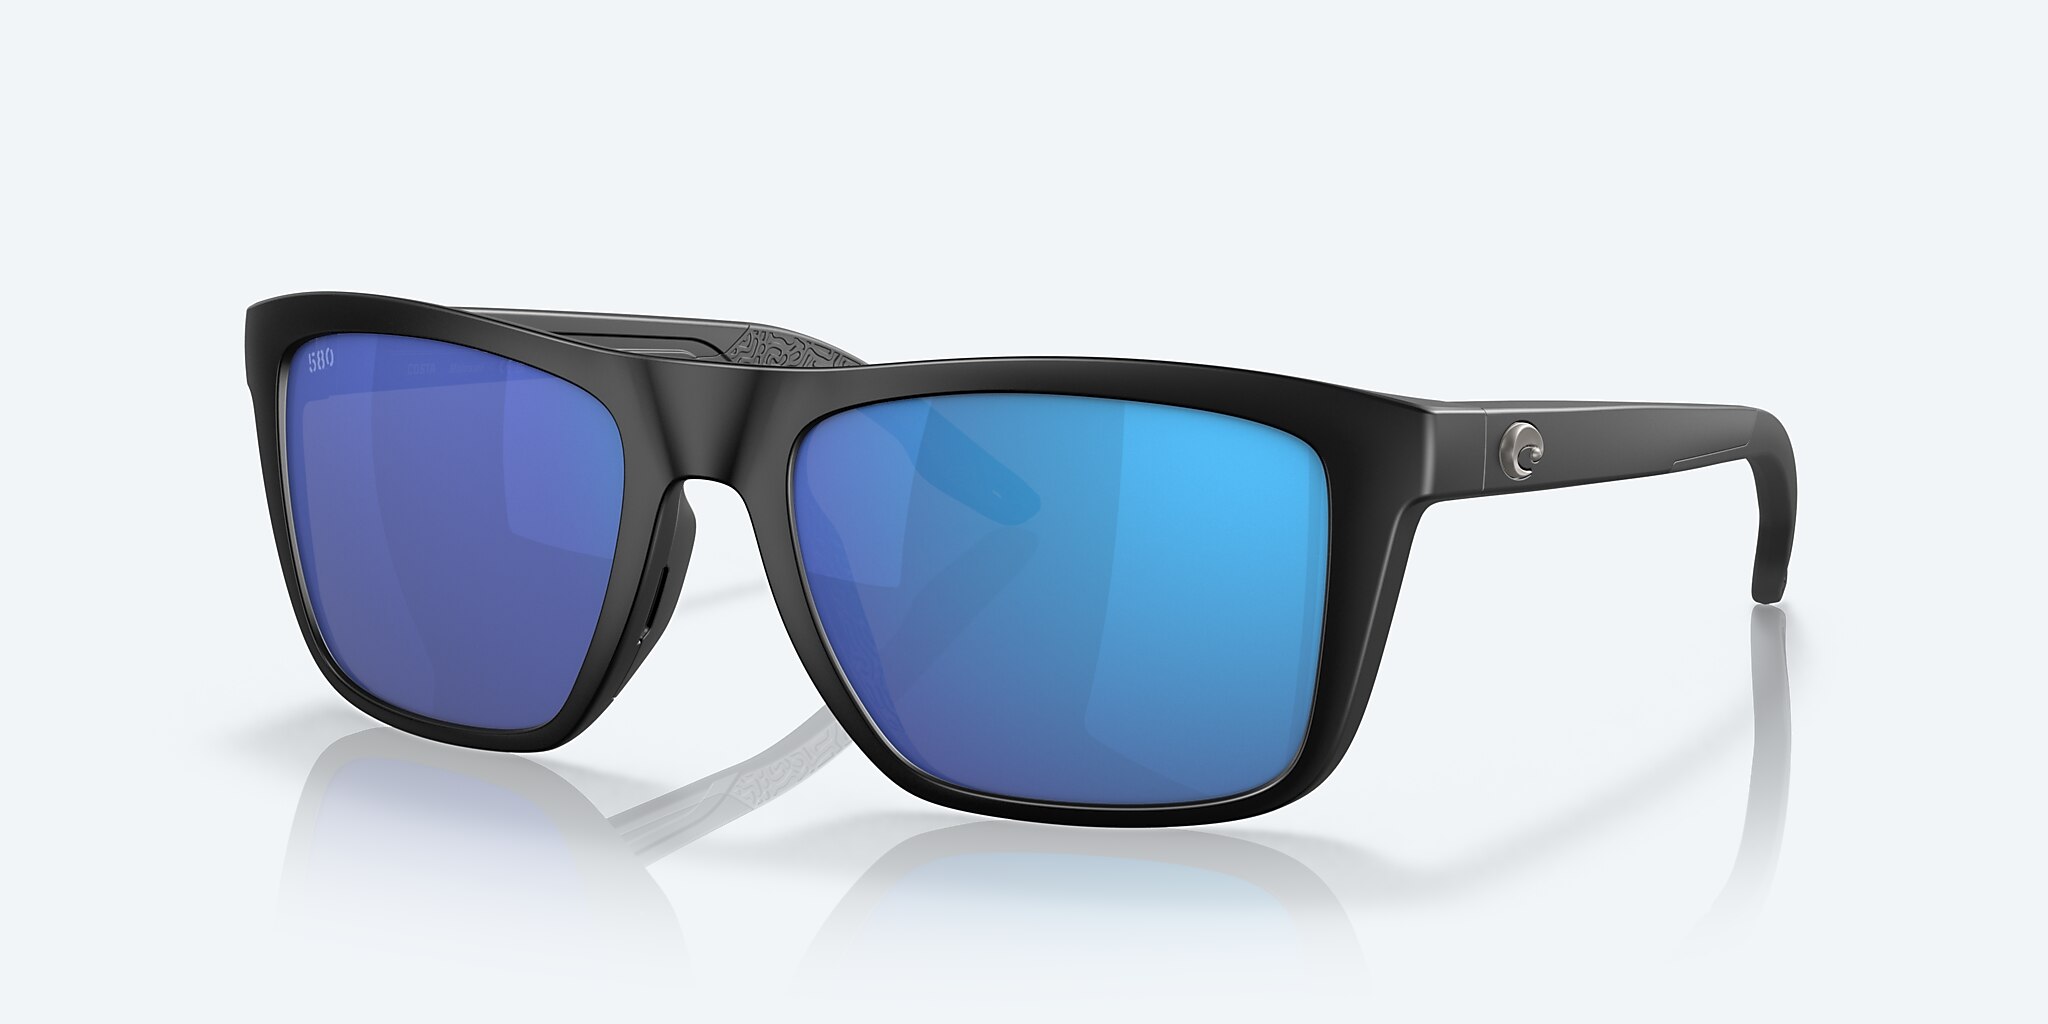 Mainsail Polarized Sunglasses in Blue Mirror